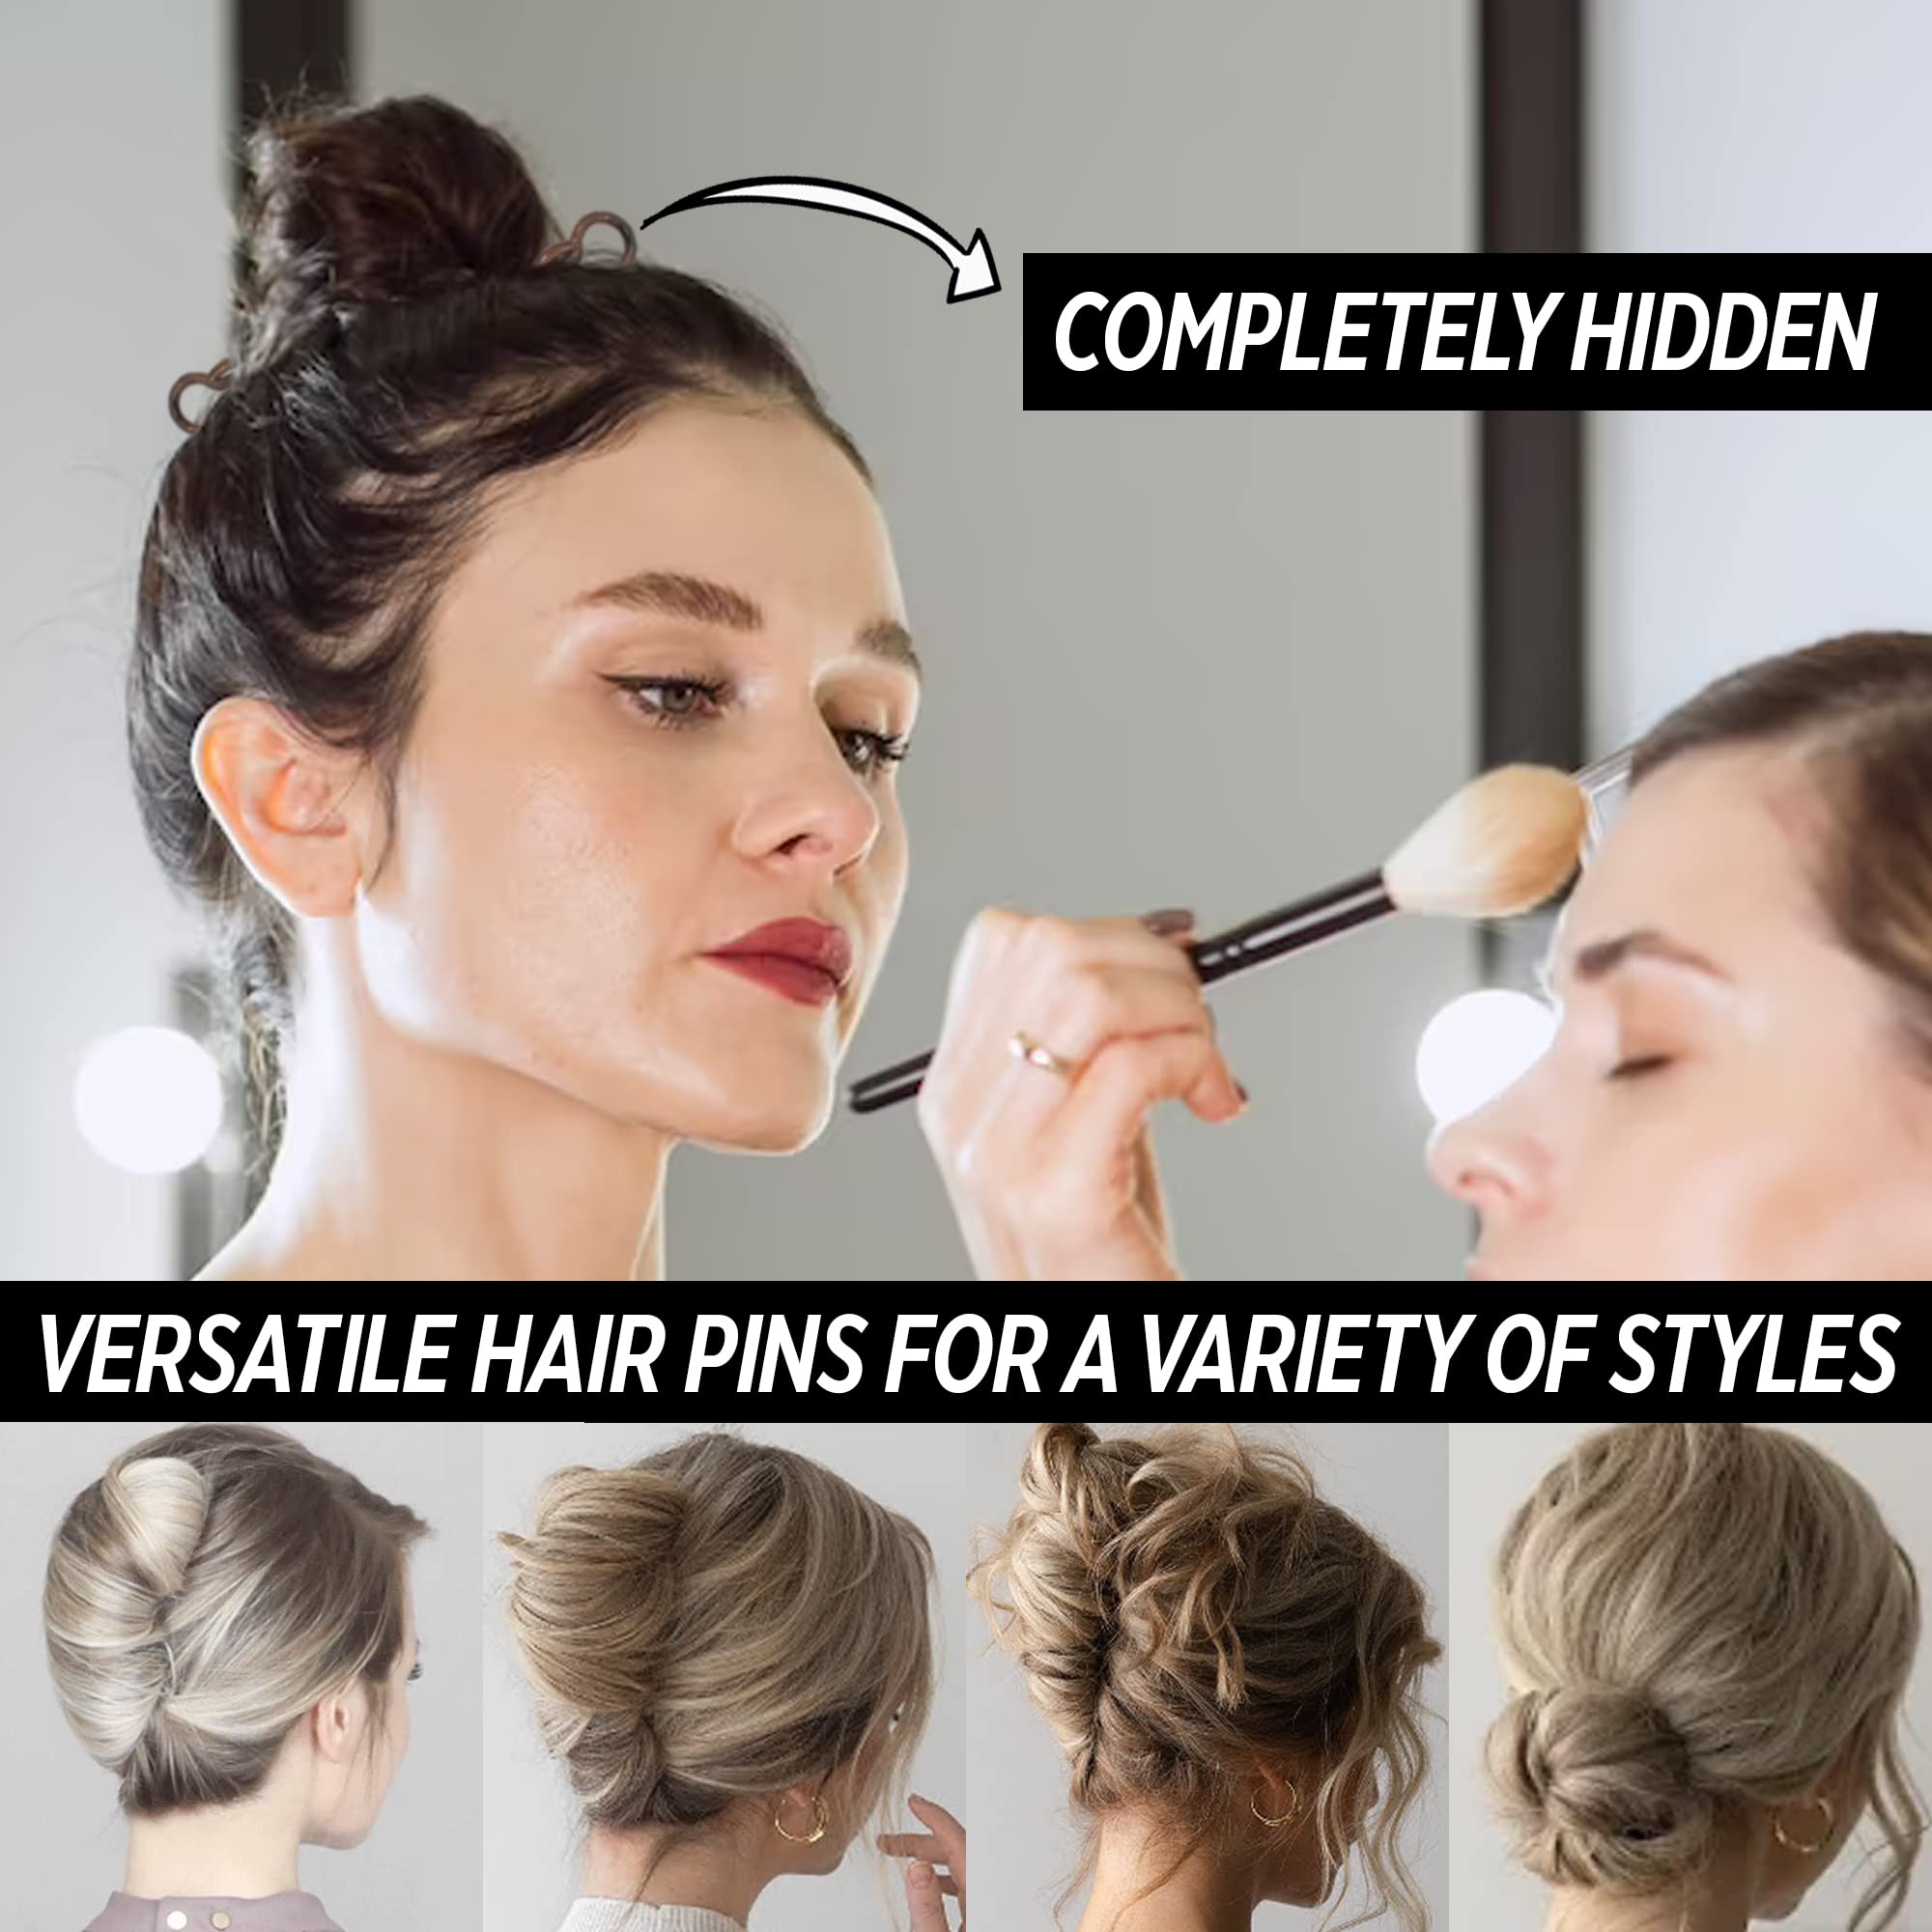 Good Hair Days Hair Pins - Plastic, U-shaped Magic Grip Hairpins, Strong Durable Pins For Fine, Thick & Long Hair, Hair Styling Accessories, Set of 10 (Black)